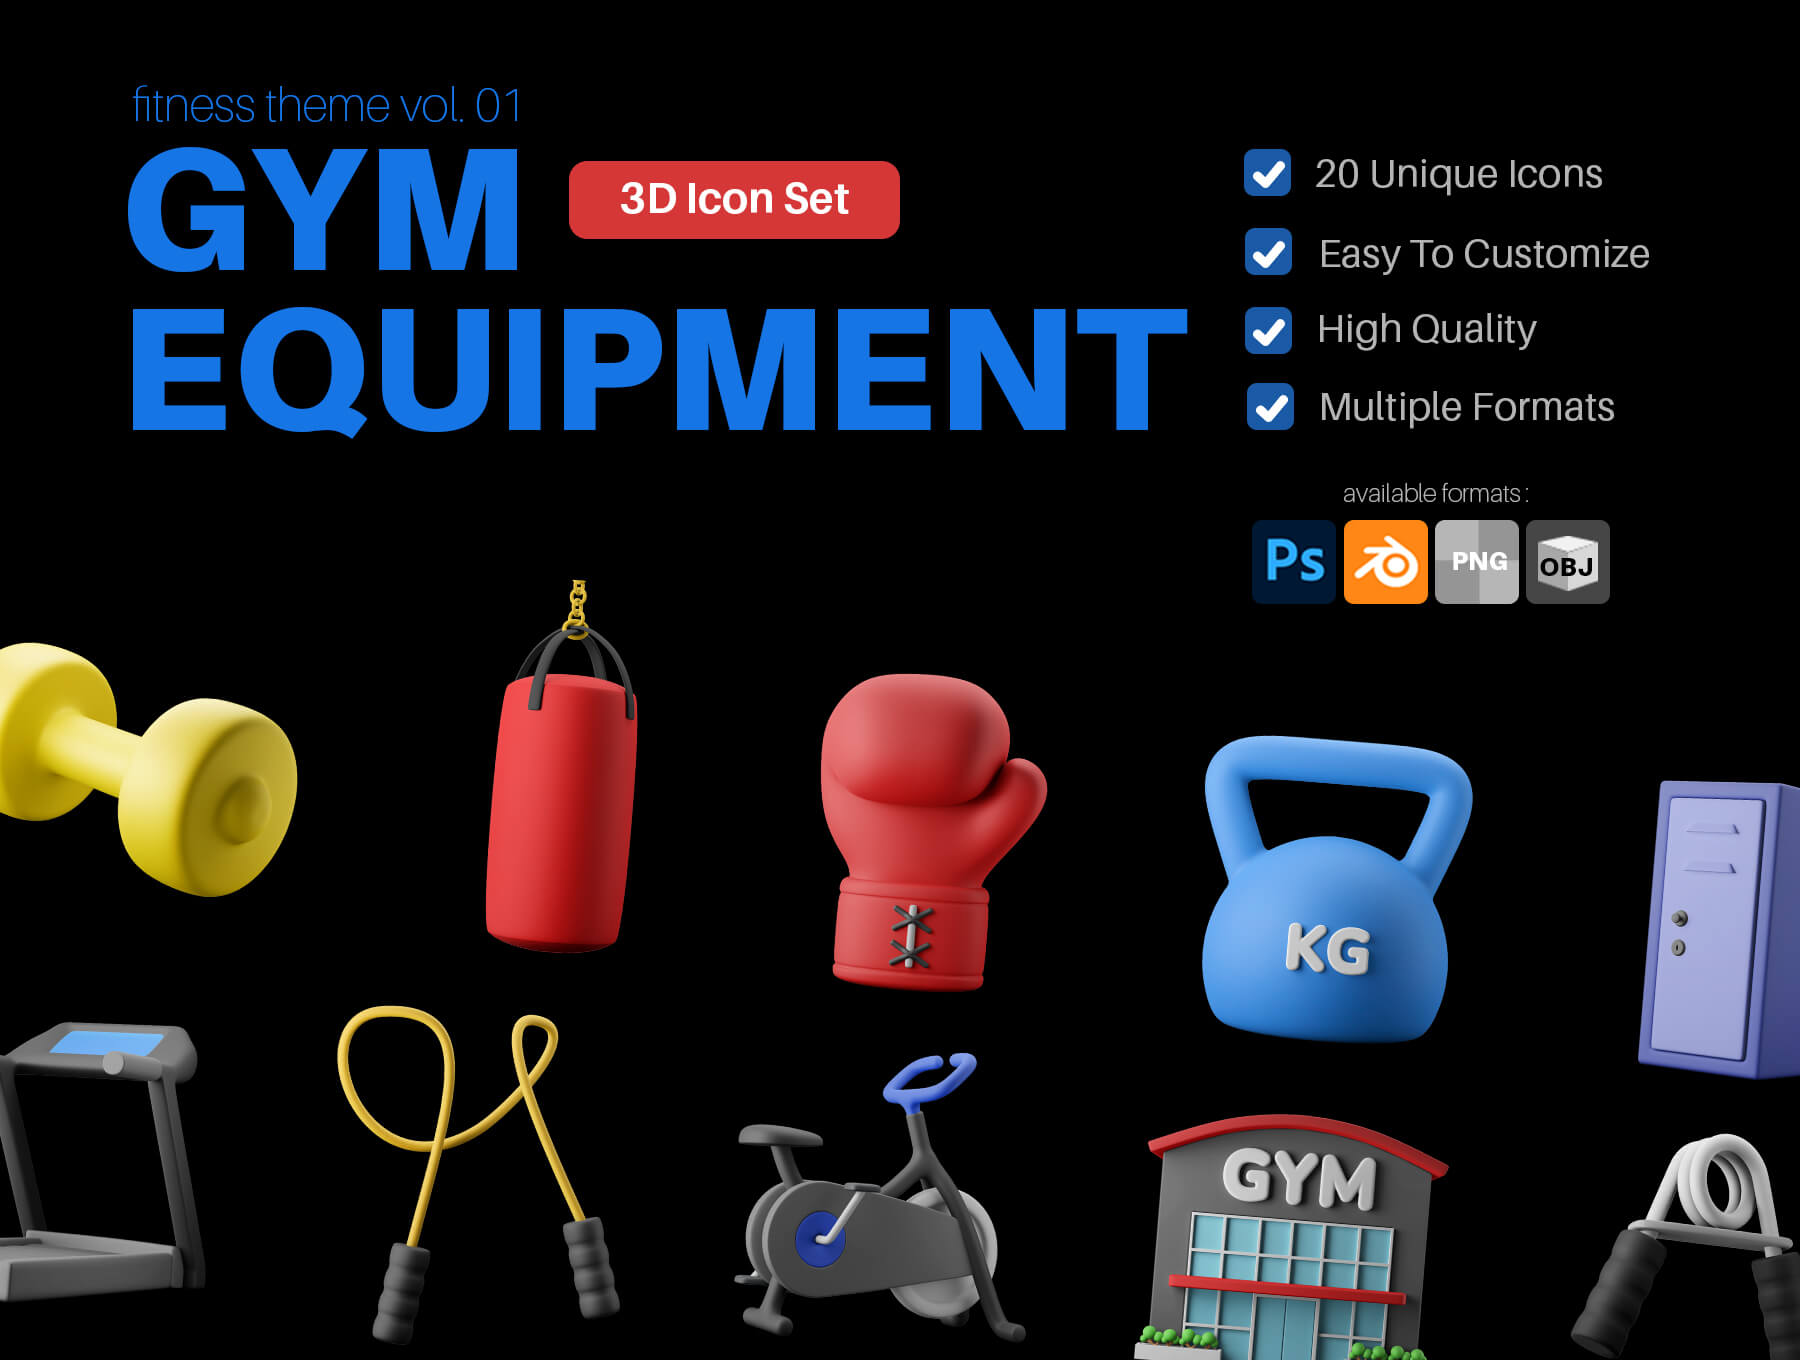 Fitness Gym Equipment 3D Icon Pack 20款健身房健身器材3D插图图标icon设计素材psd分层文件